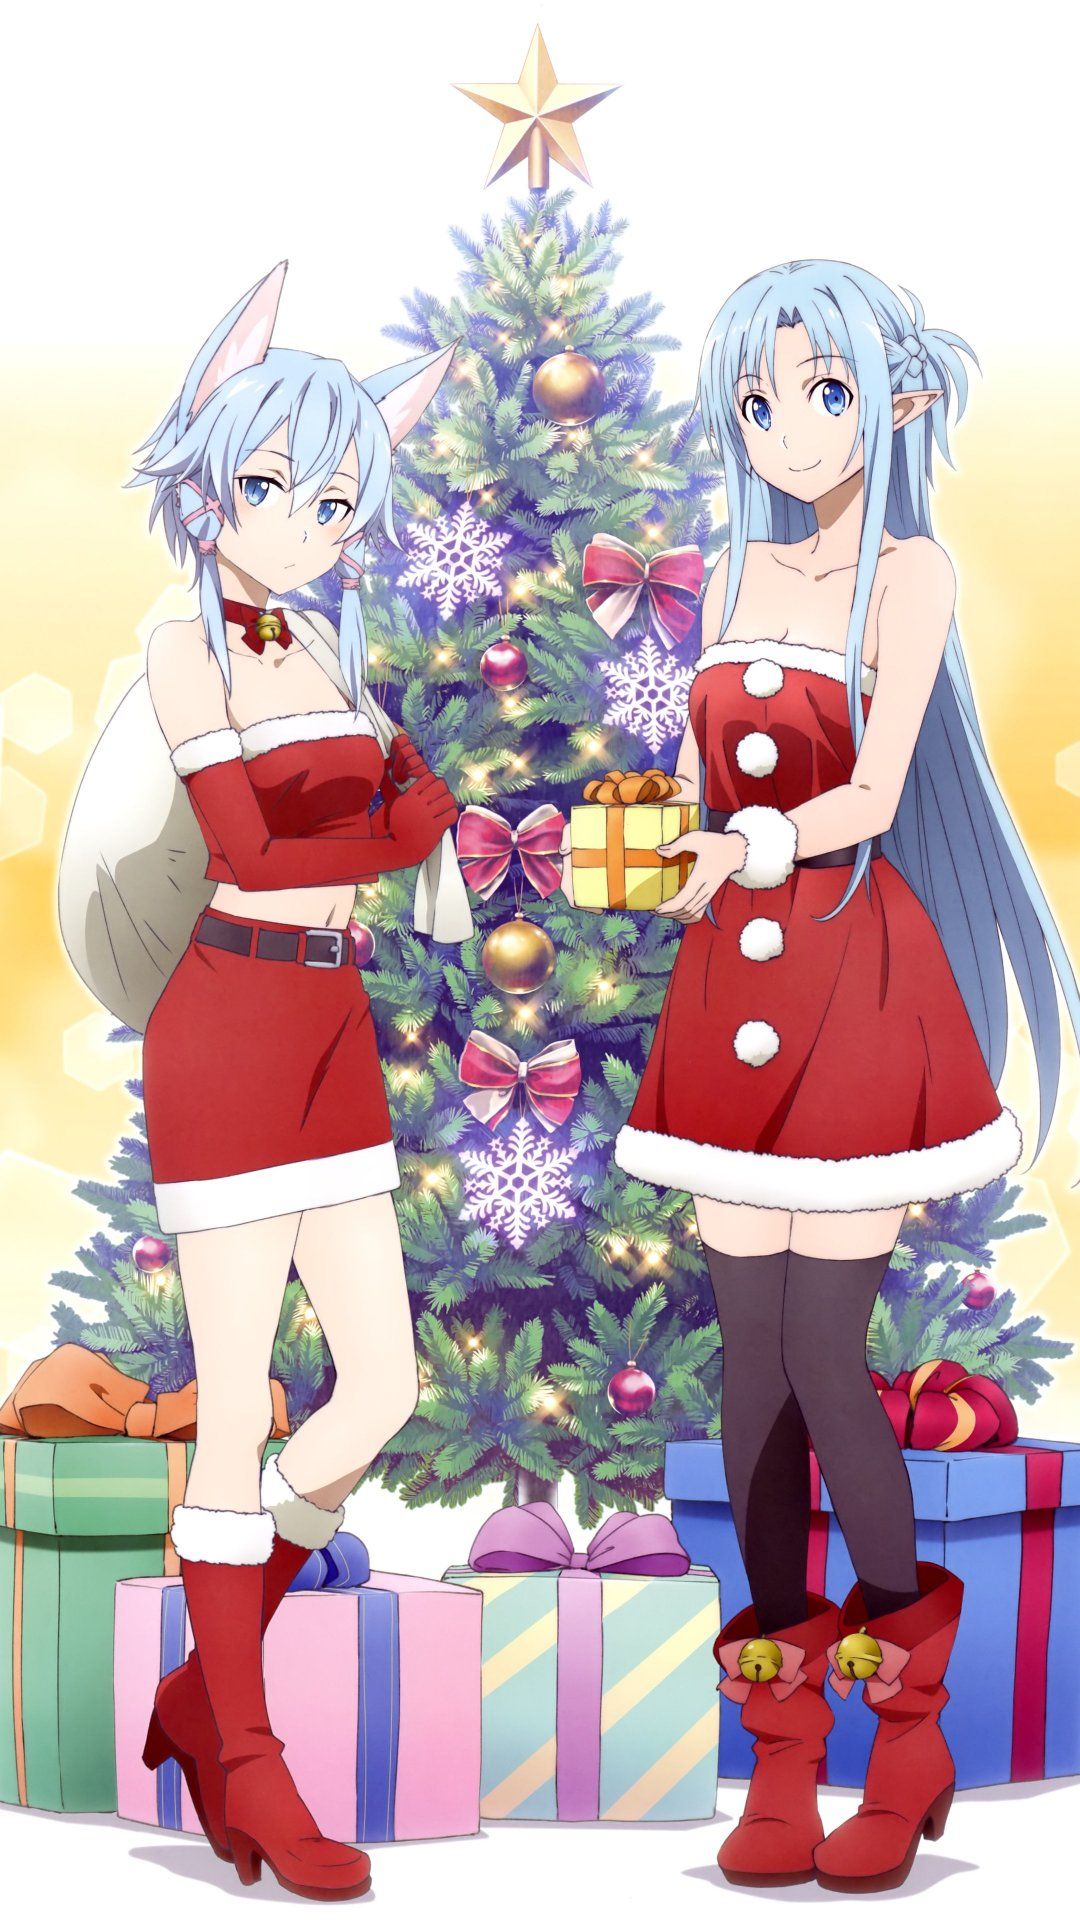 Christmas Anime girls  whatsupbugs Photo 43644998  Fanpop